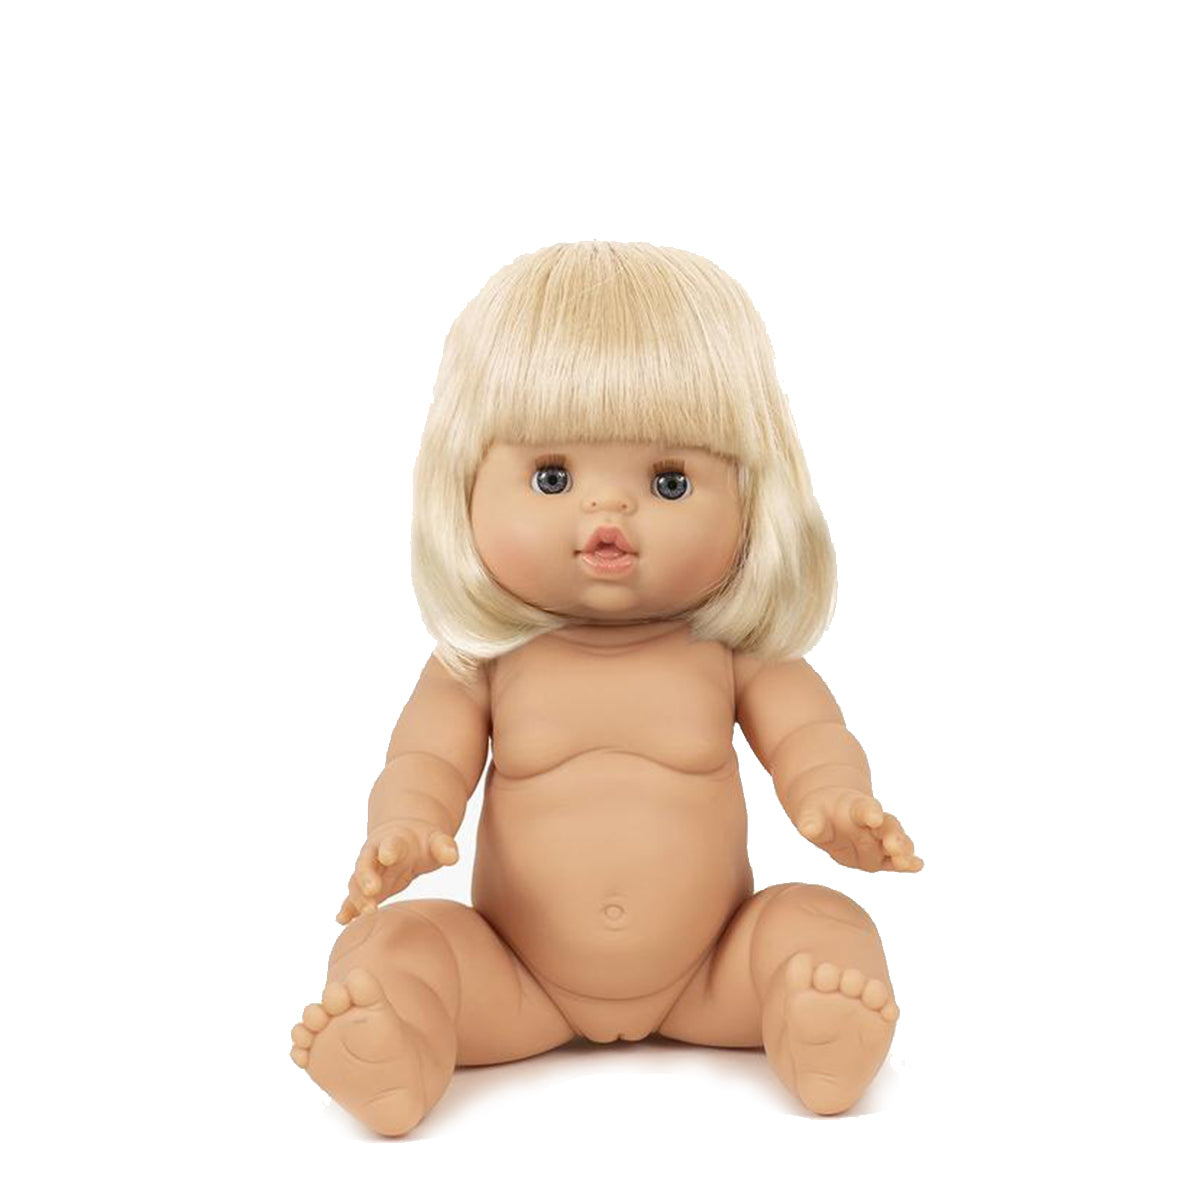 Minikane | Paola Reina Baby Doll – Angela